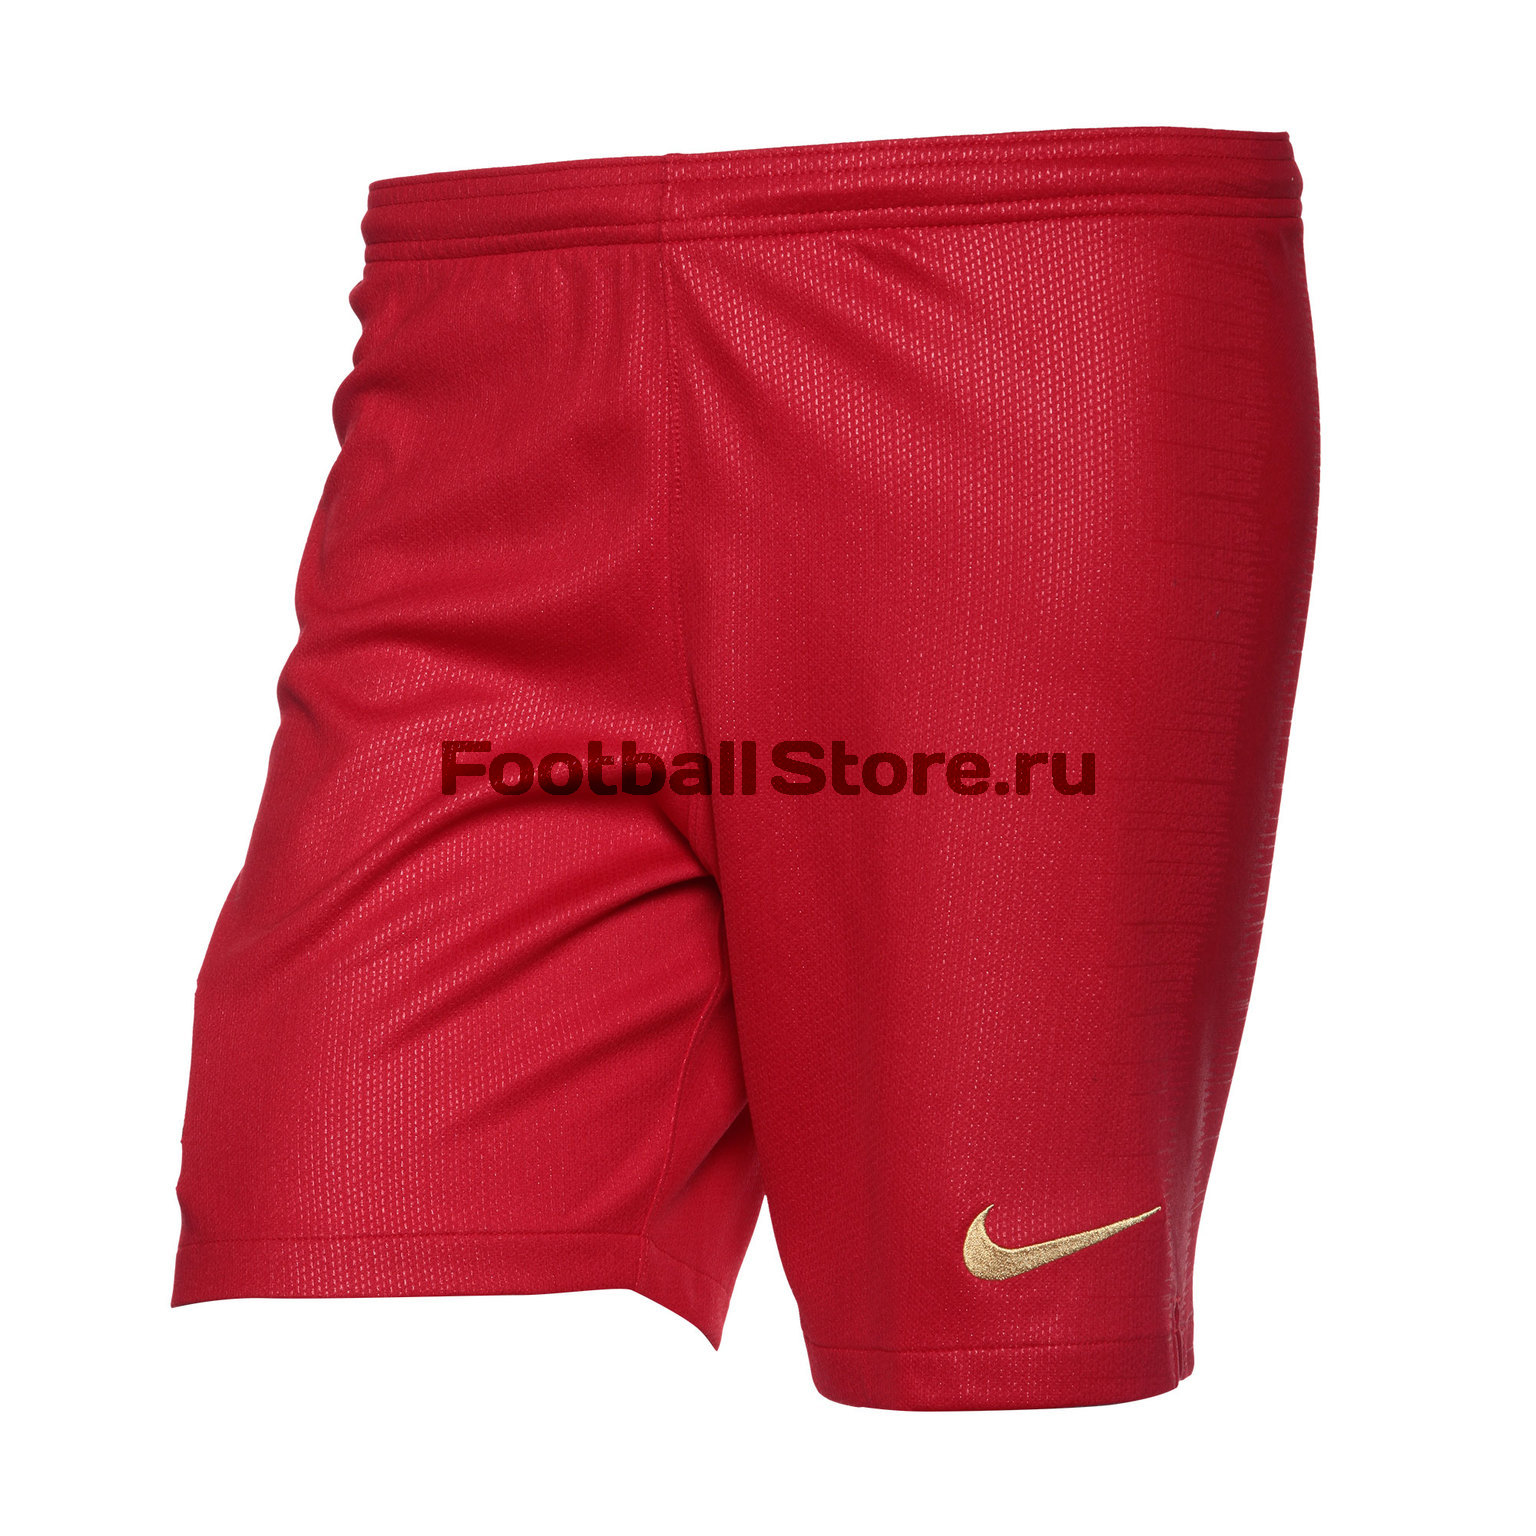 Шорты Nike сборной Португалии 893932-687 